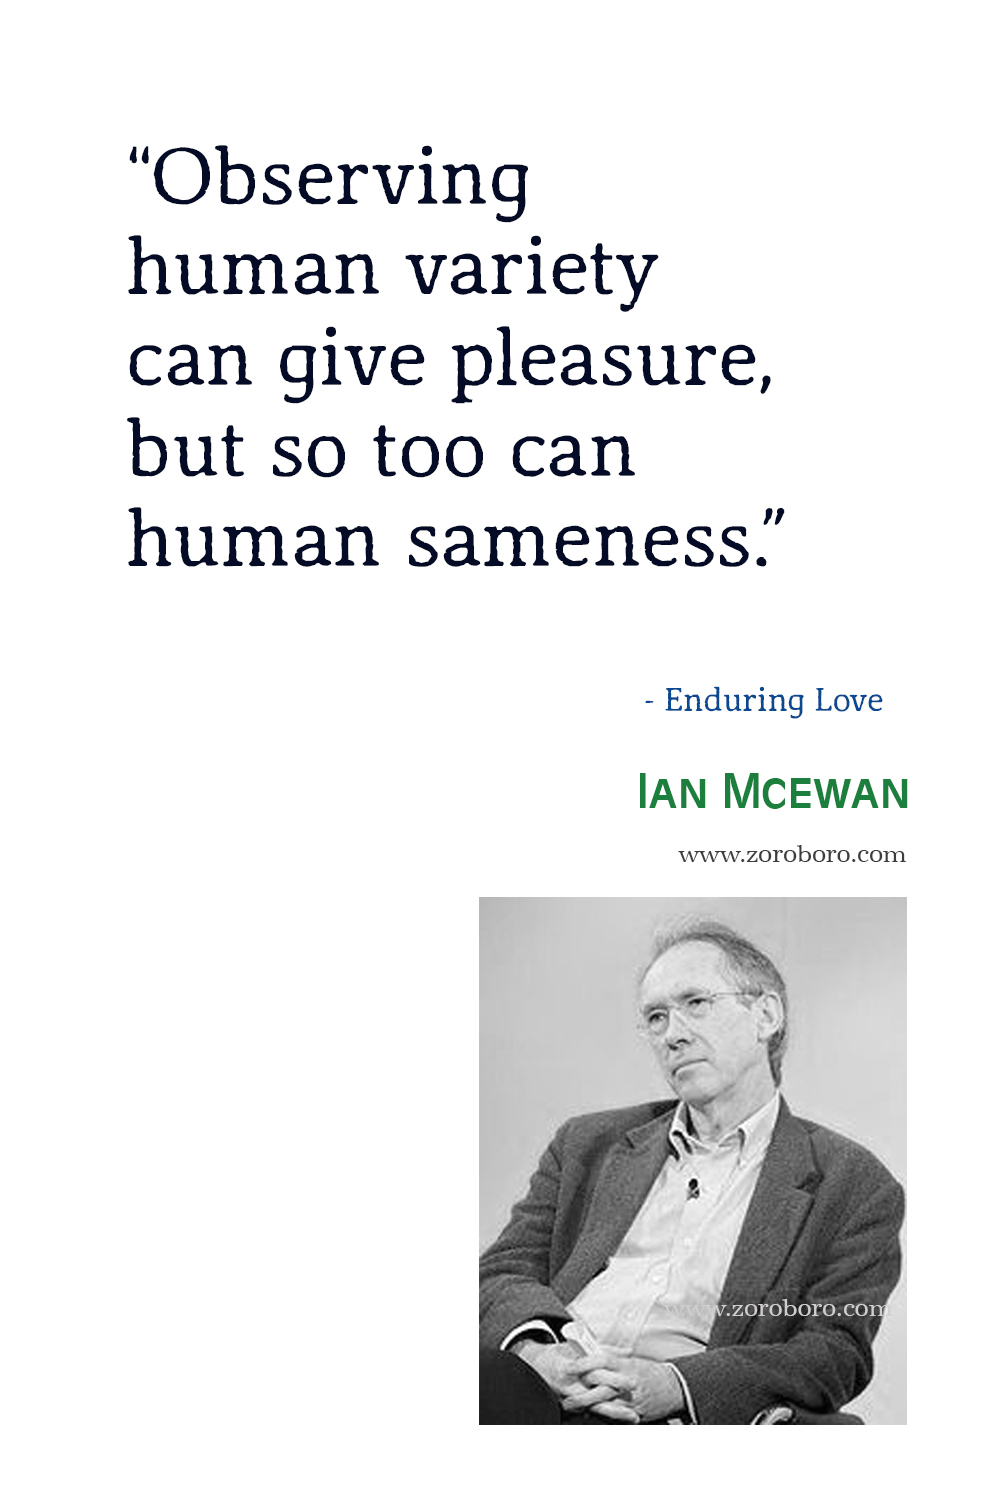 Ian McEwan Quotes, Ian McEwan Books Quotes, Ian McEwan Nutshell, Atonement Quotes, Ian McEwan Novel Quotes